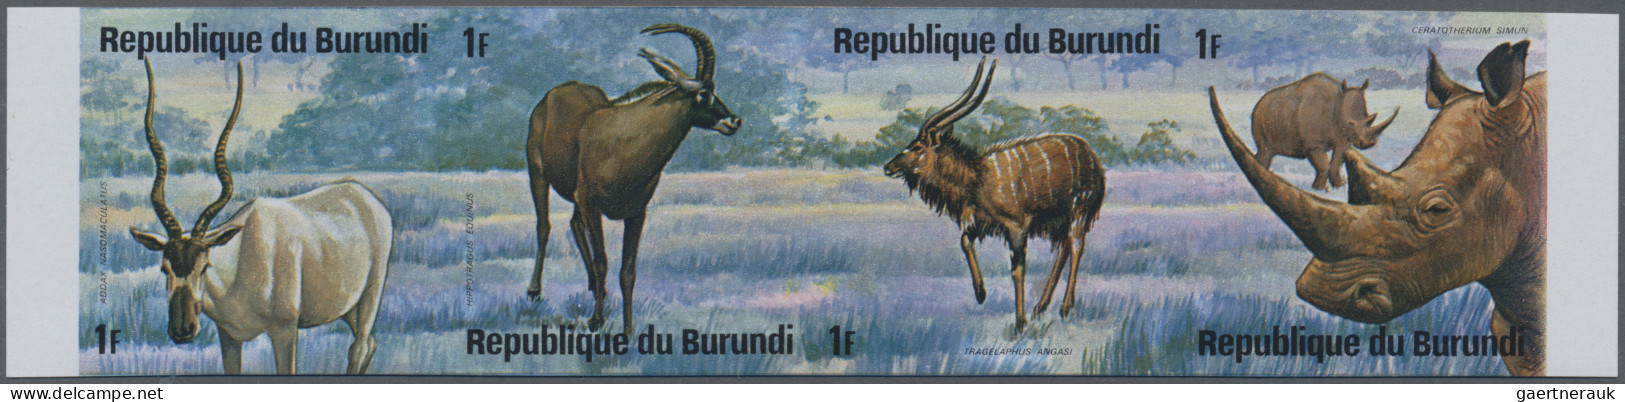 Burundi: 1975: African Animals, 12 imperforate mint se-tenats. (COB 1.500 €).